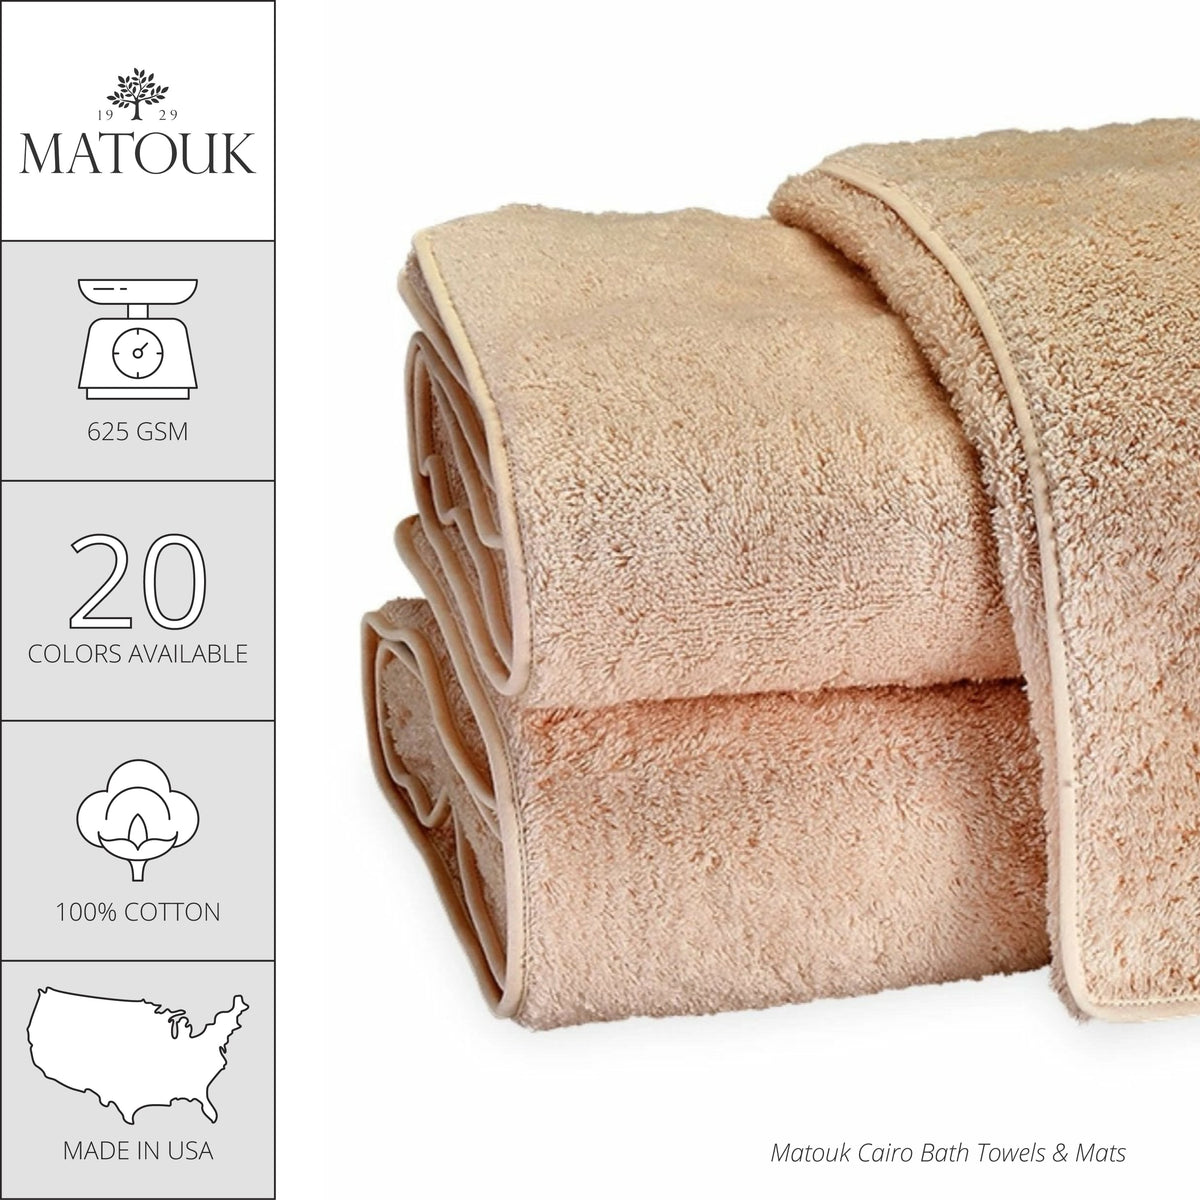 Matouk Cairo Scallop Bath Towels and Mats - Light Blue/White